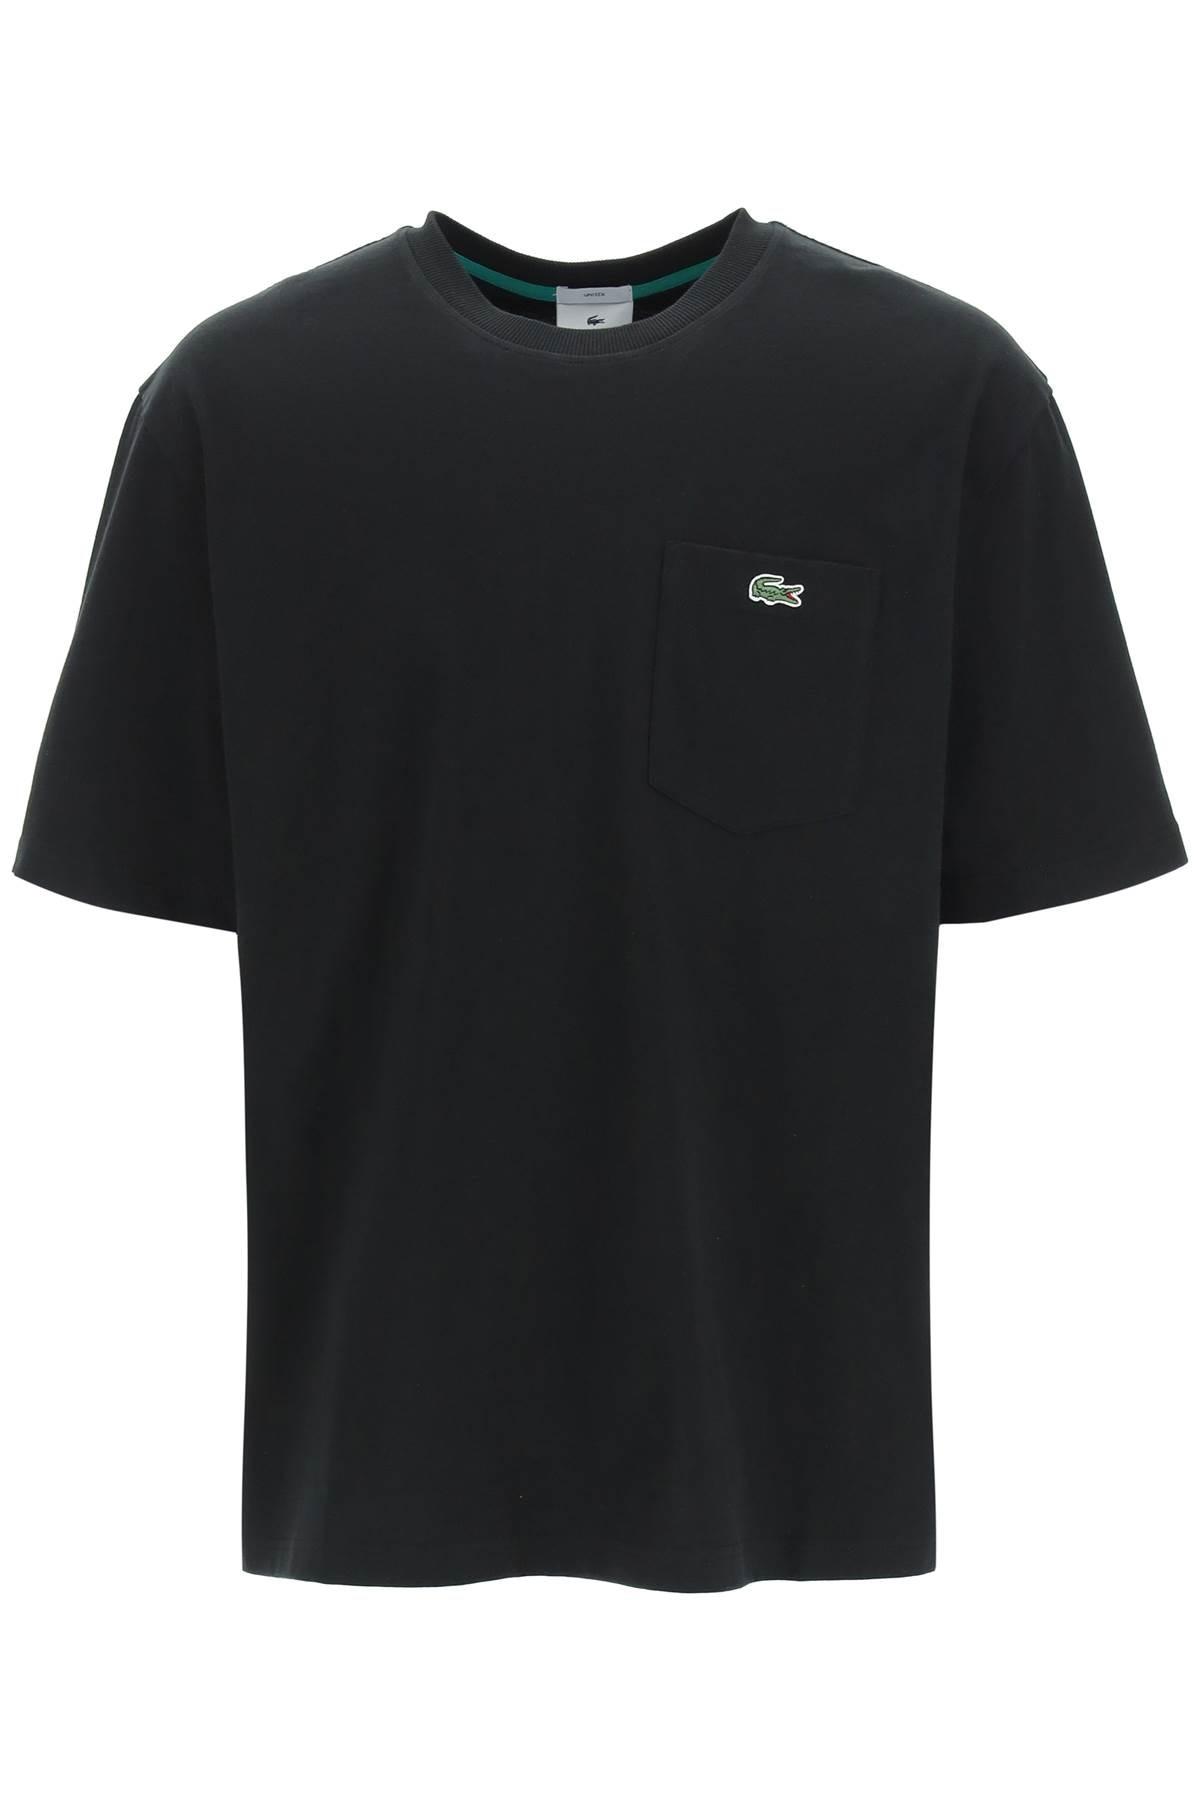 Lacoste Print T-shirt in Black for Men | Lyst